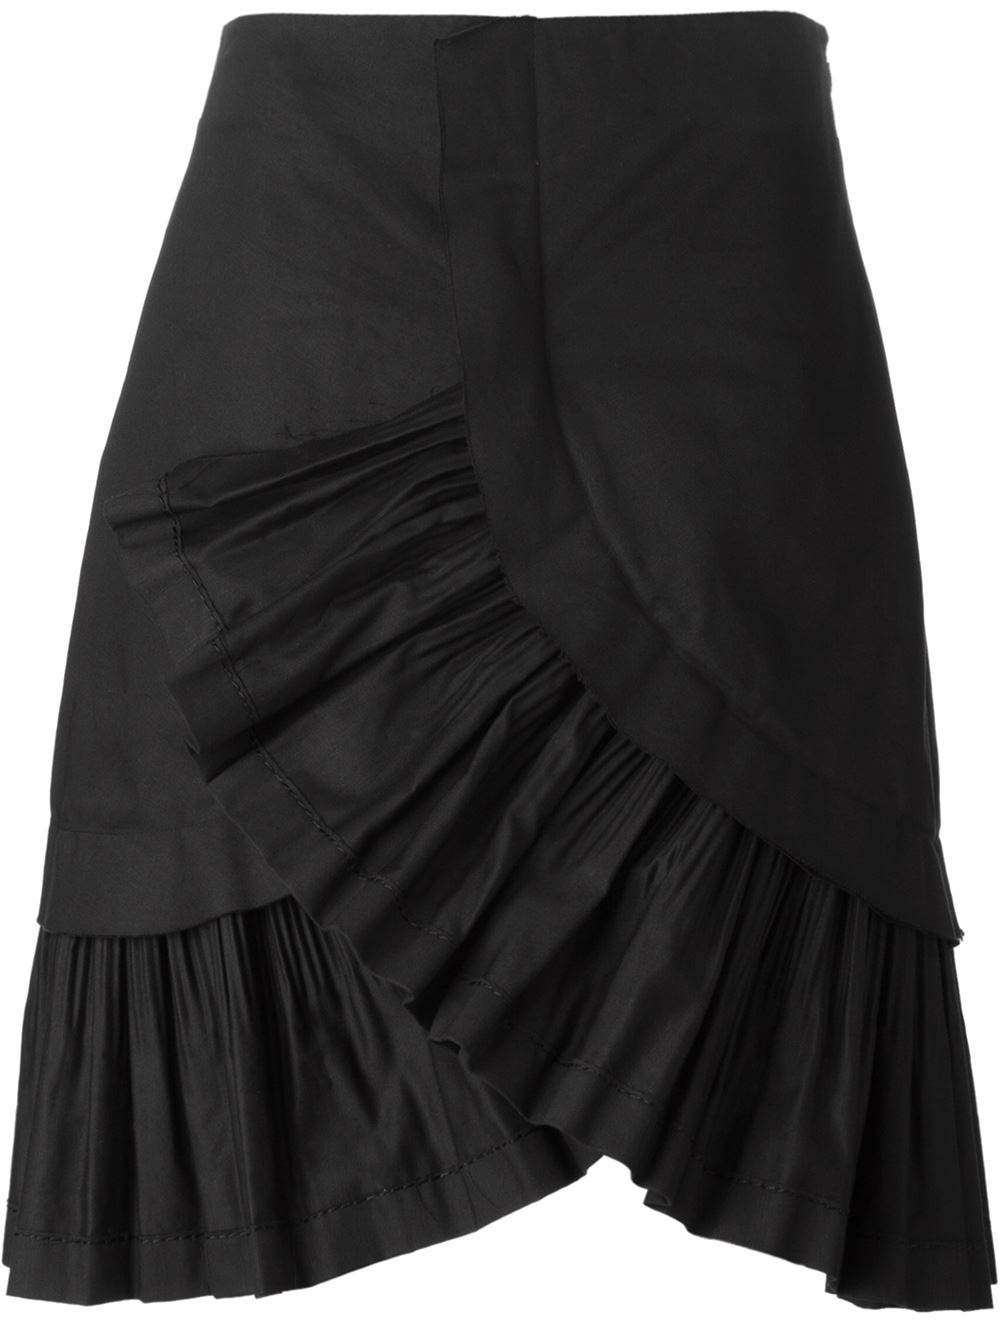 Marni Frill Skirt in Black | Lyst